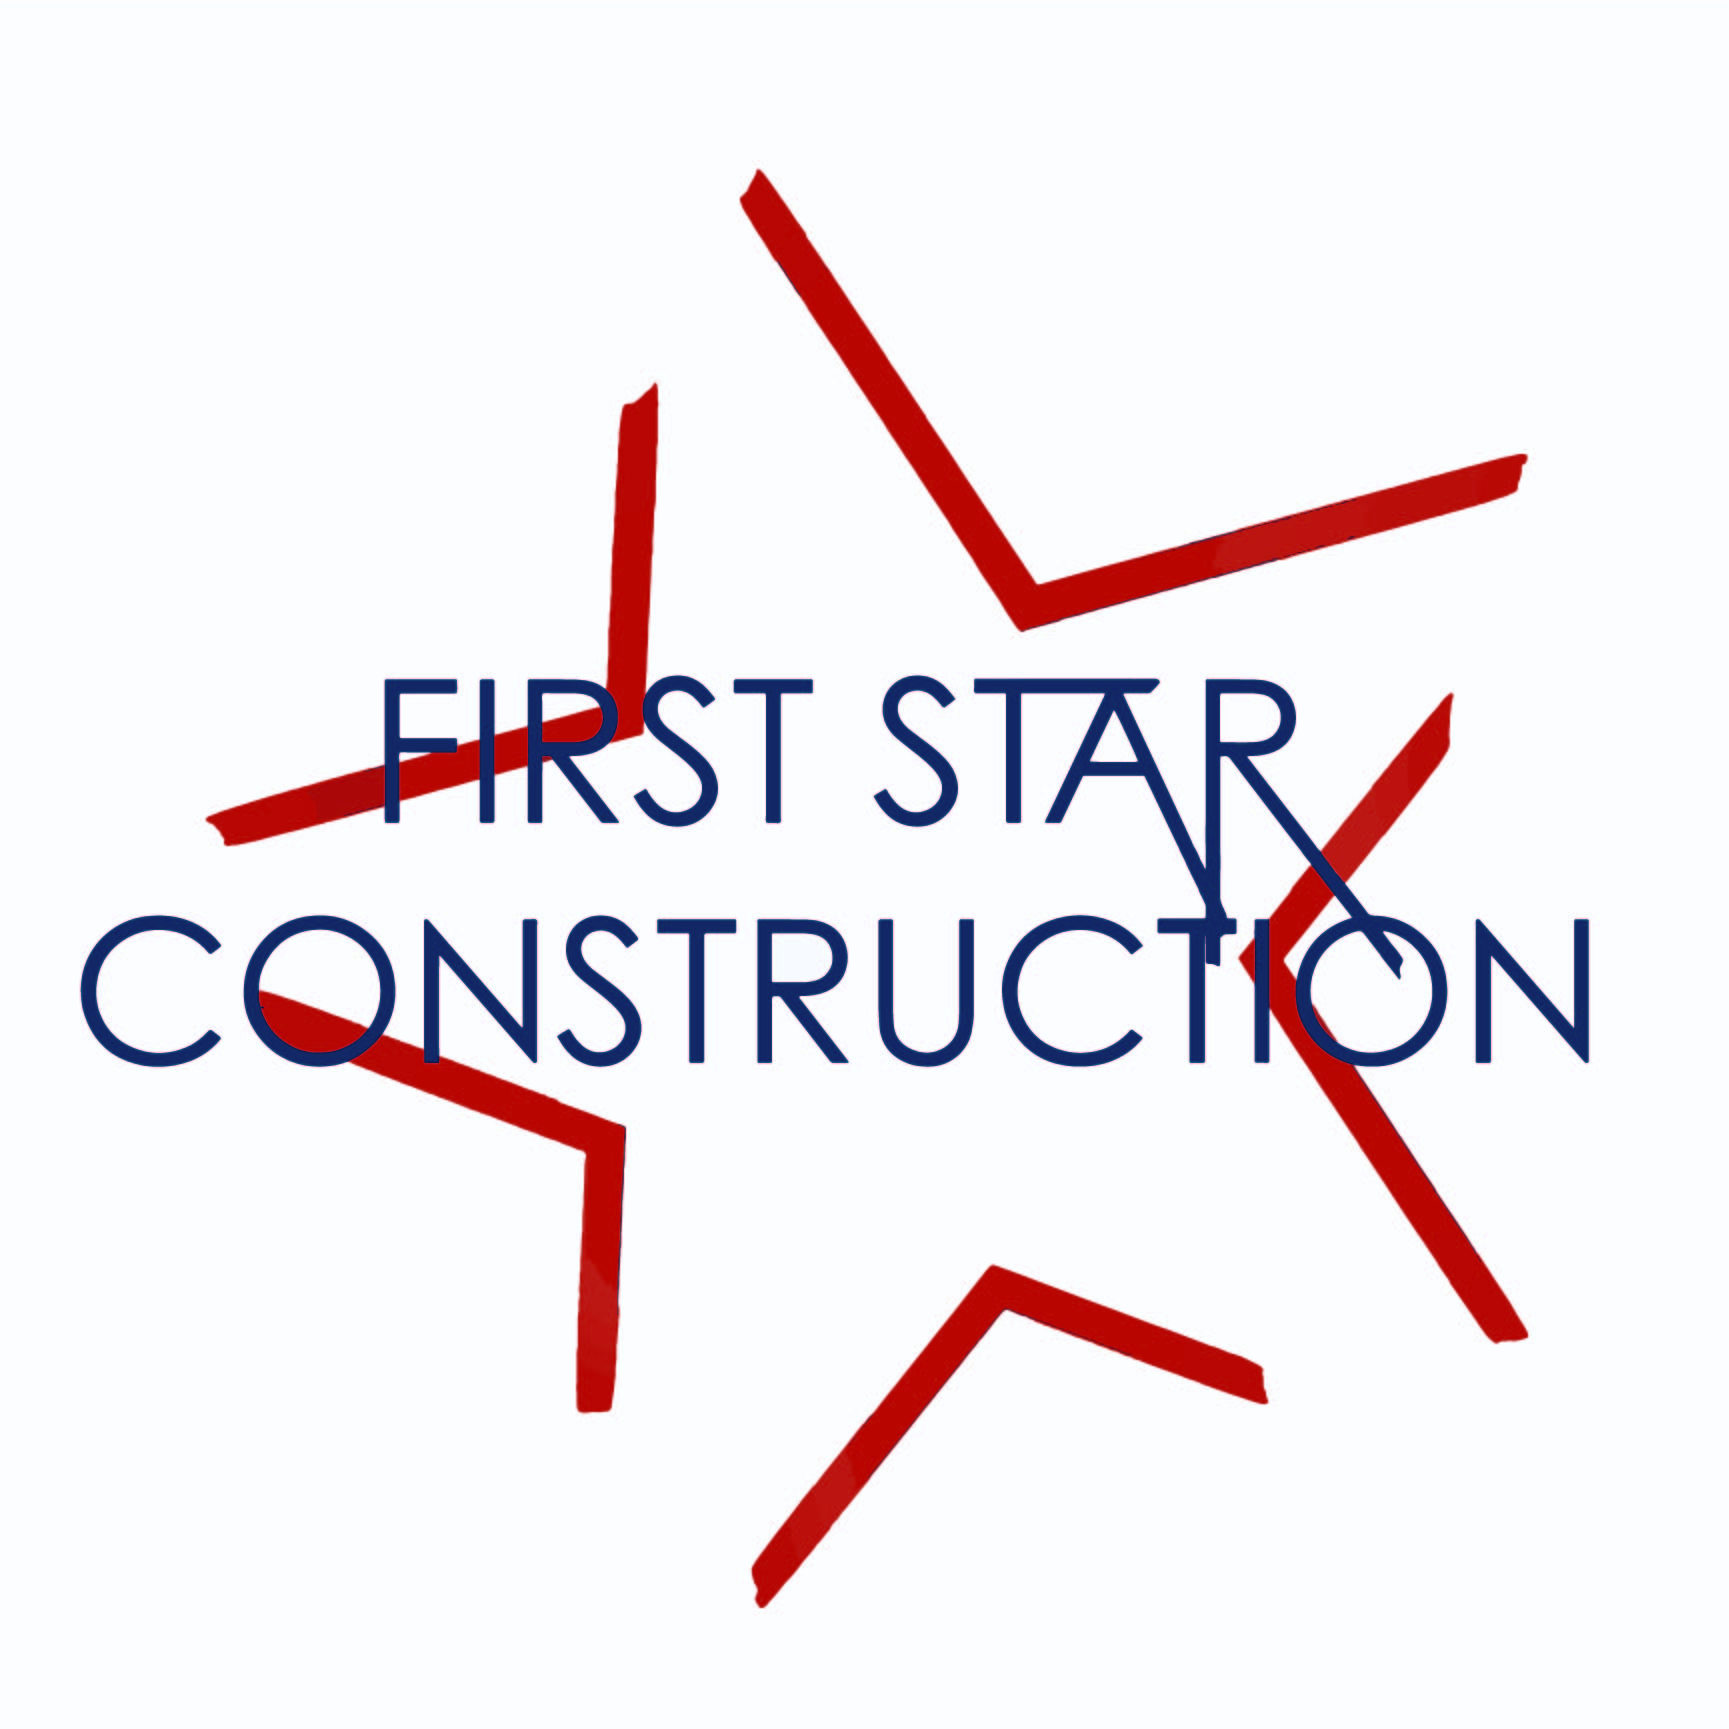 FIRST STAR CONSTRUCTION